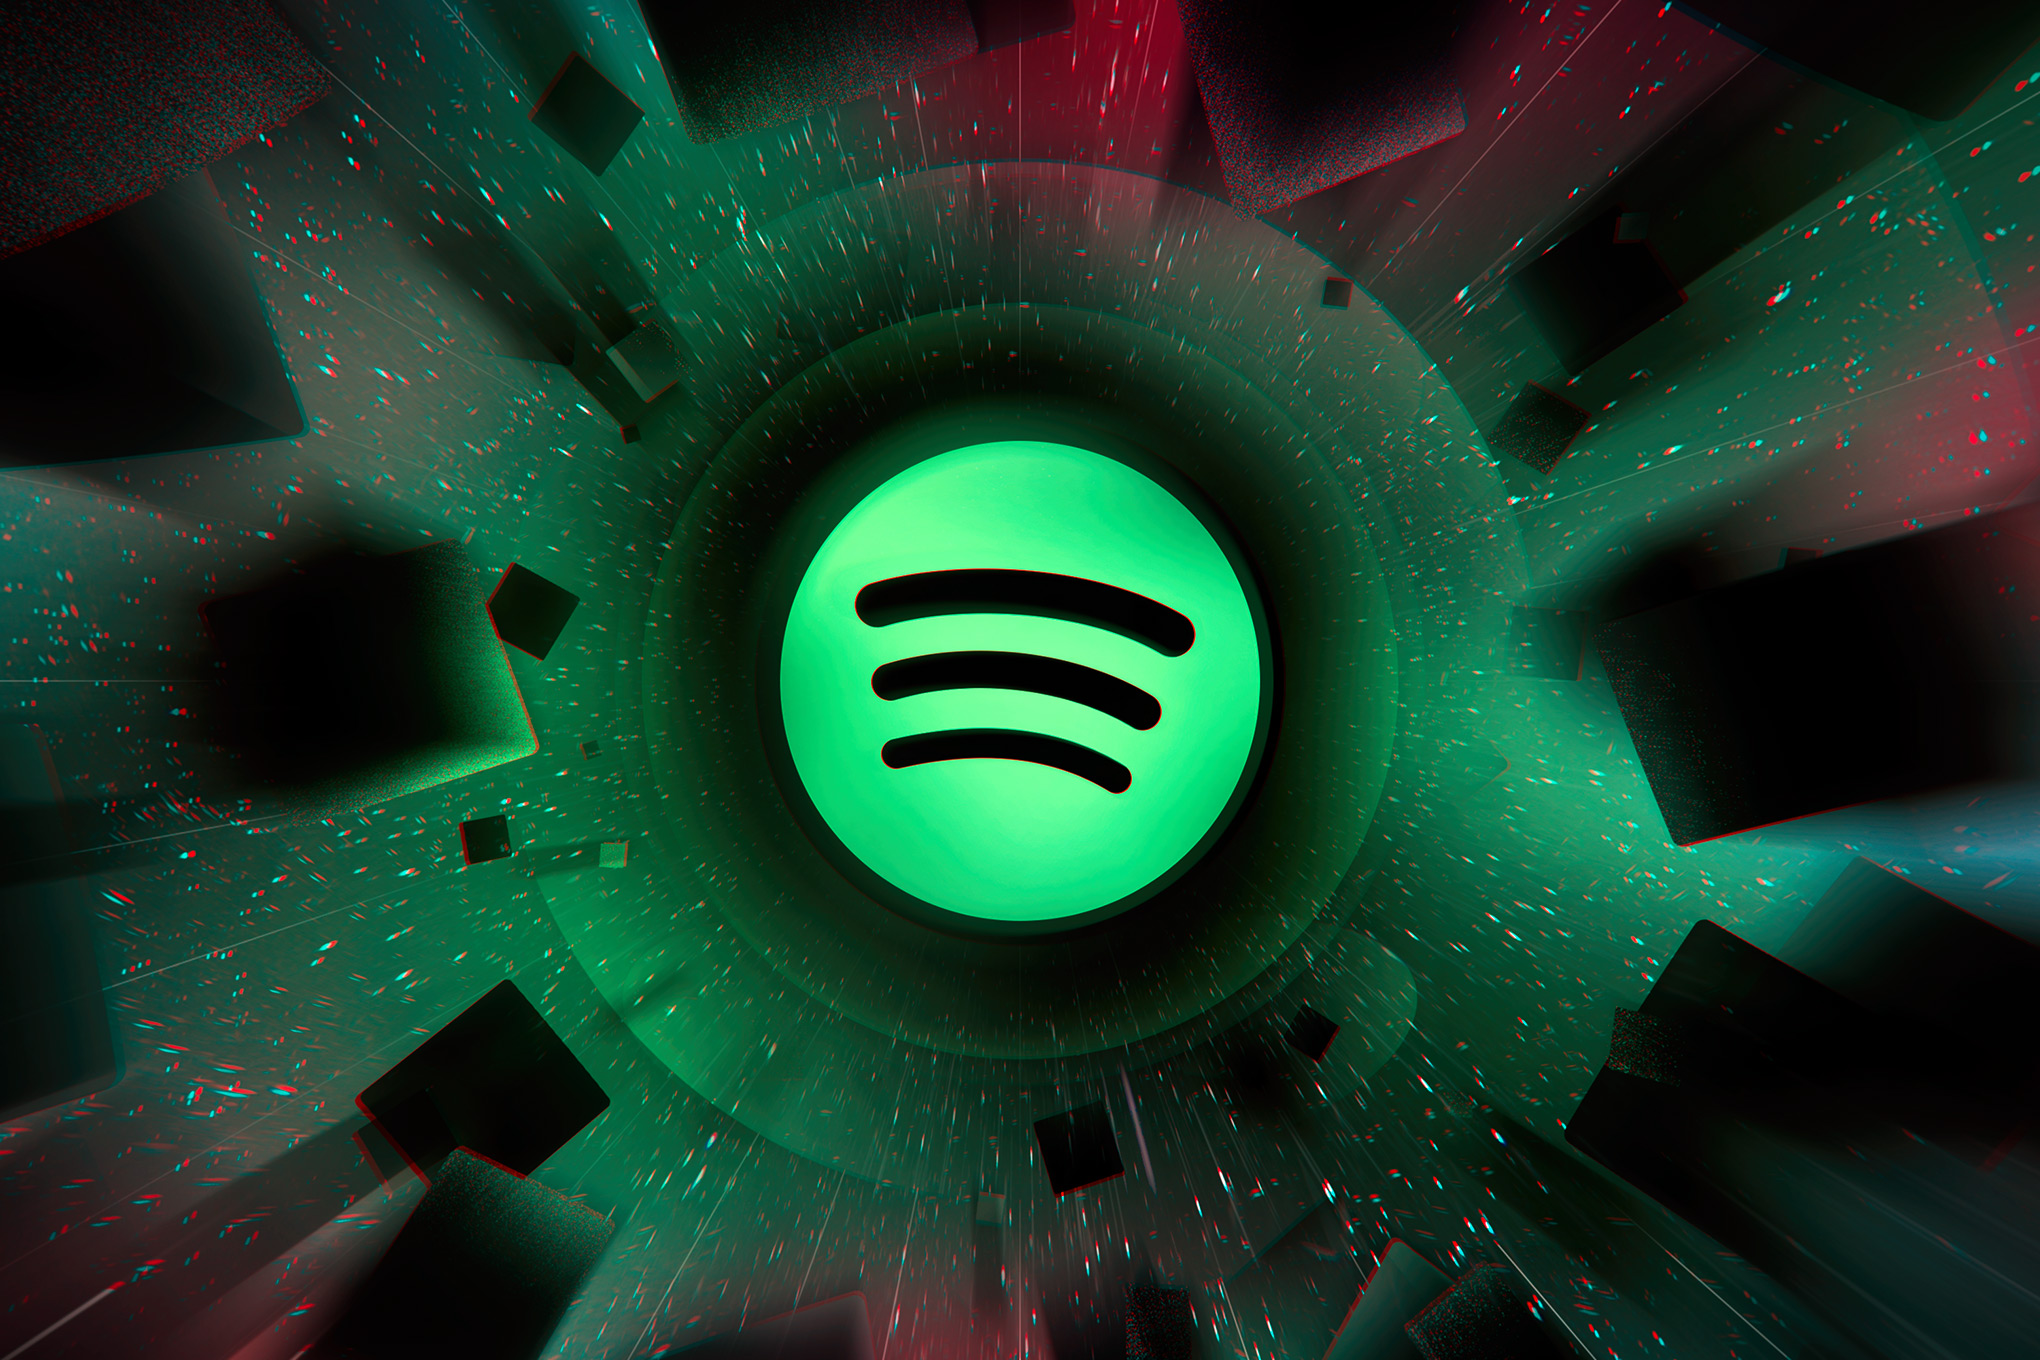 A photo illustration of Spotify’s green circle logo